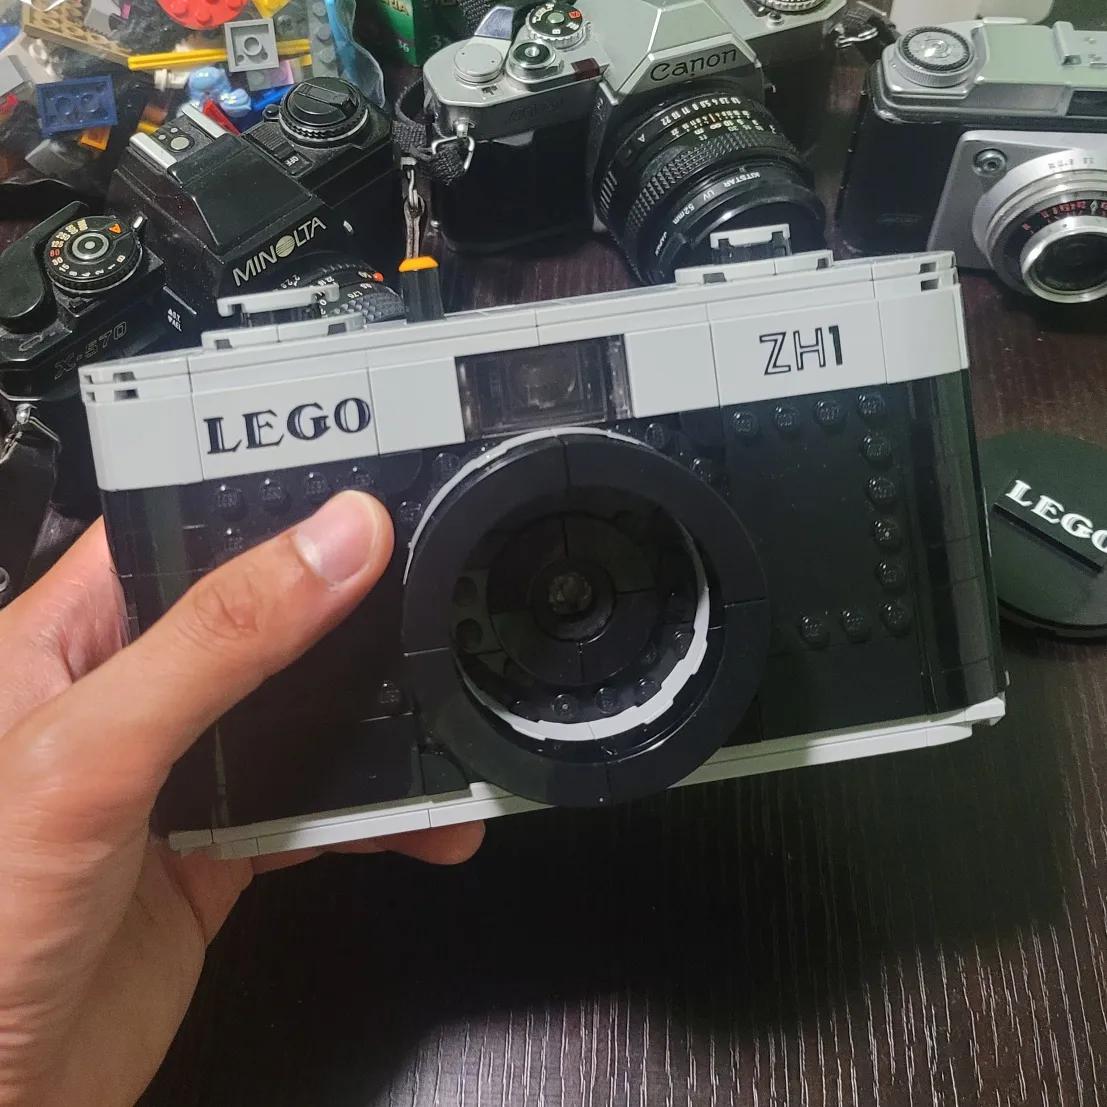 ZH1: Φωτογραφική μηχανή από εξαρτήματα του δημοφιλούς δανέζικου παιχνιδιού